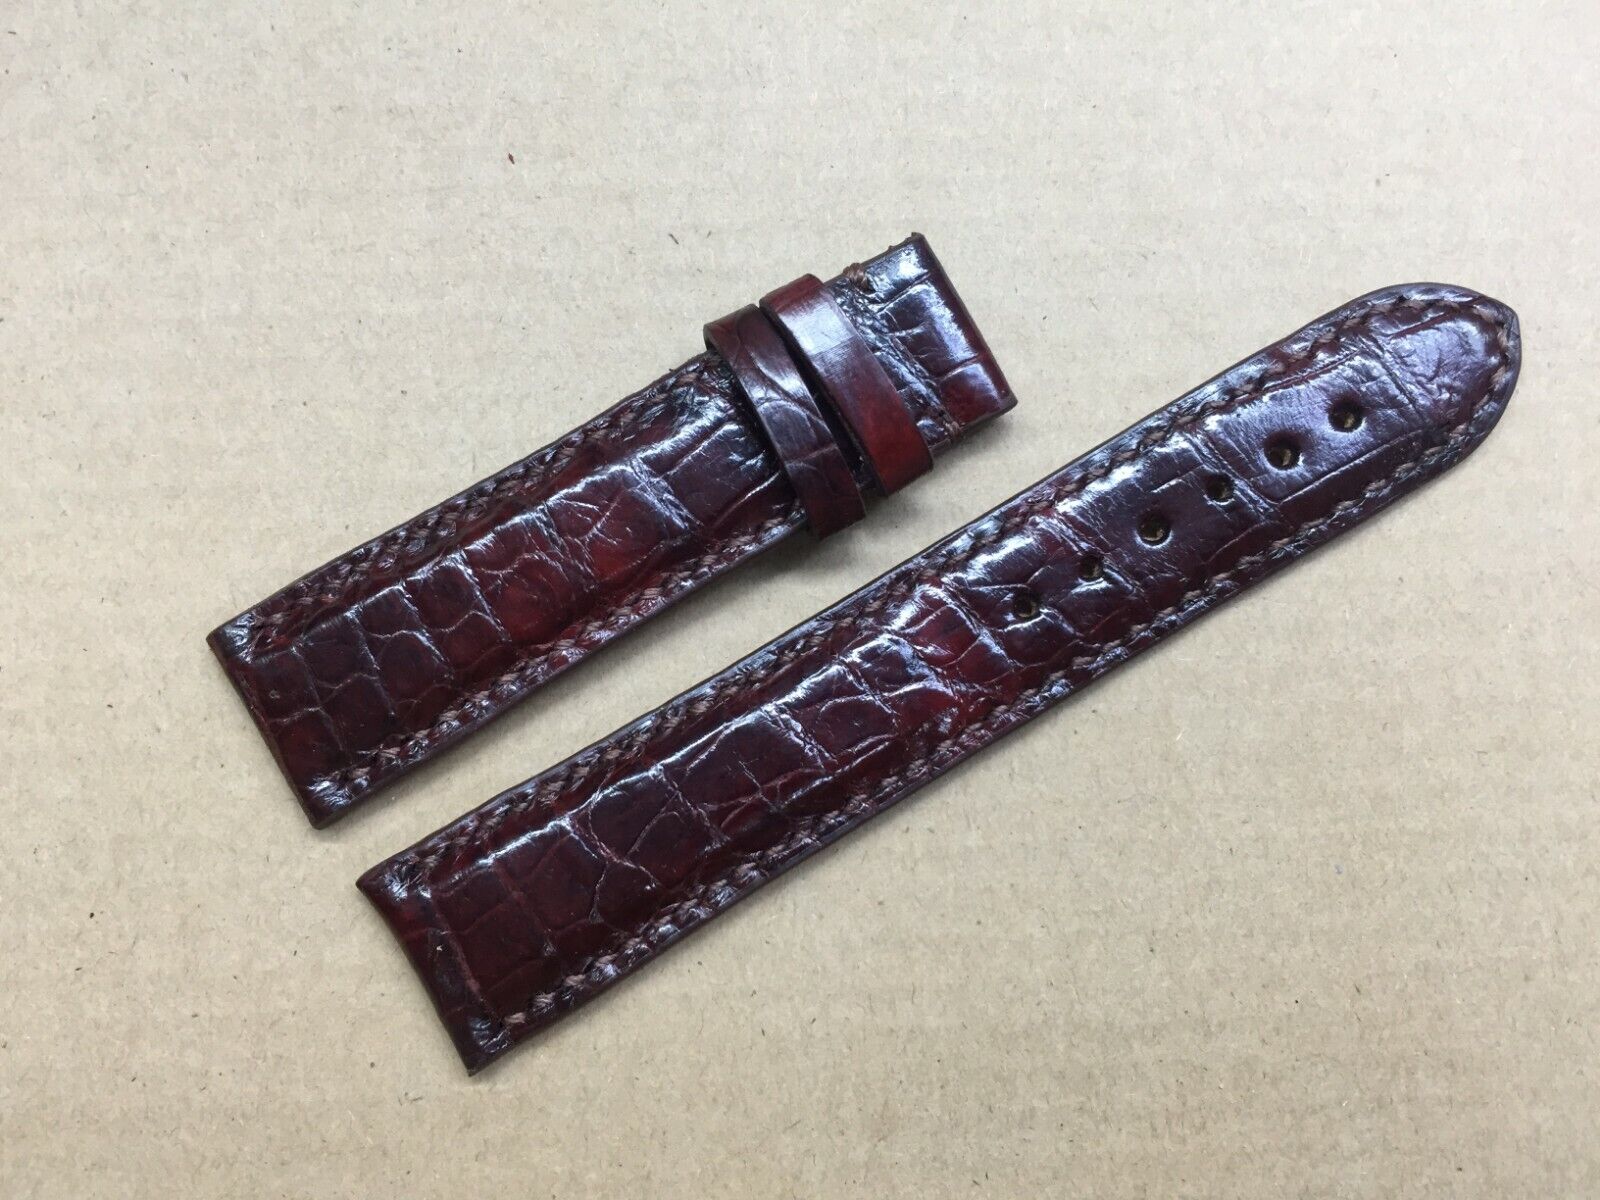  20mm/18mm Genuine Crocodile Leather Watch Strap Band Reddish Dark Brown Color